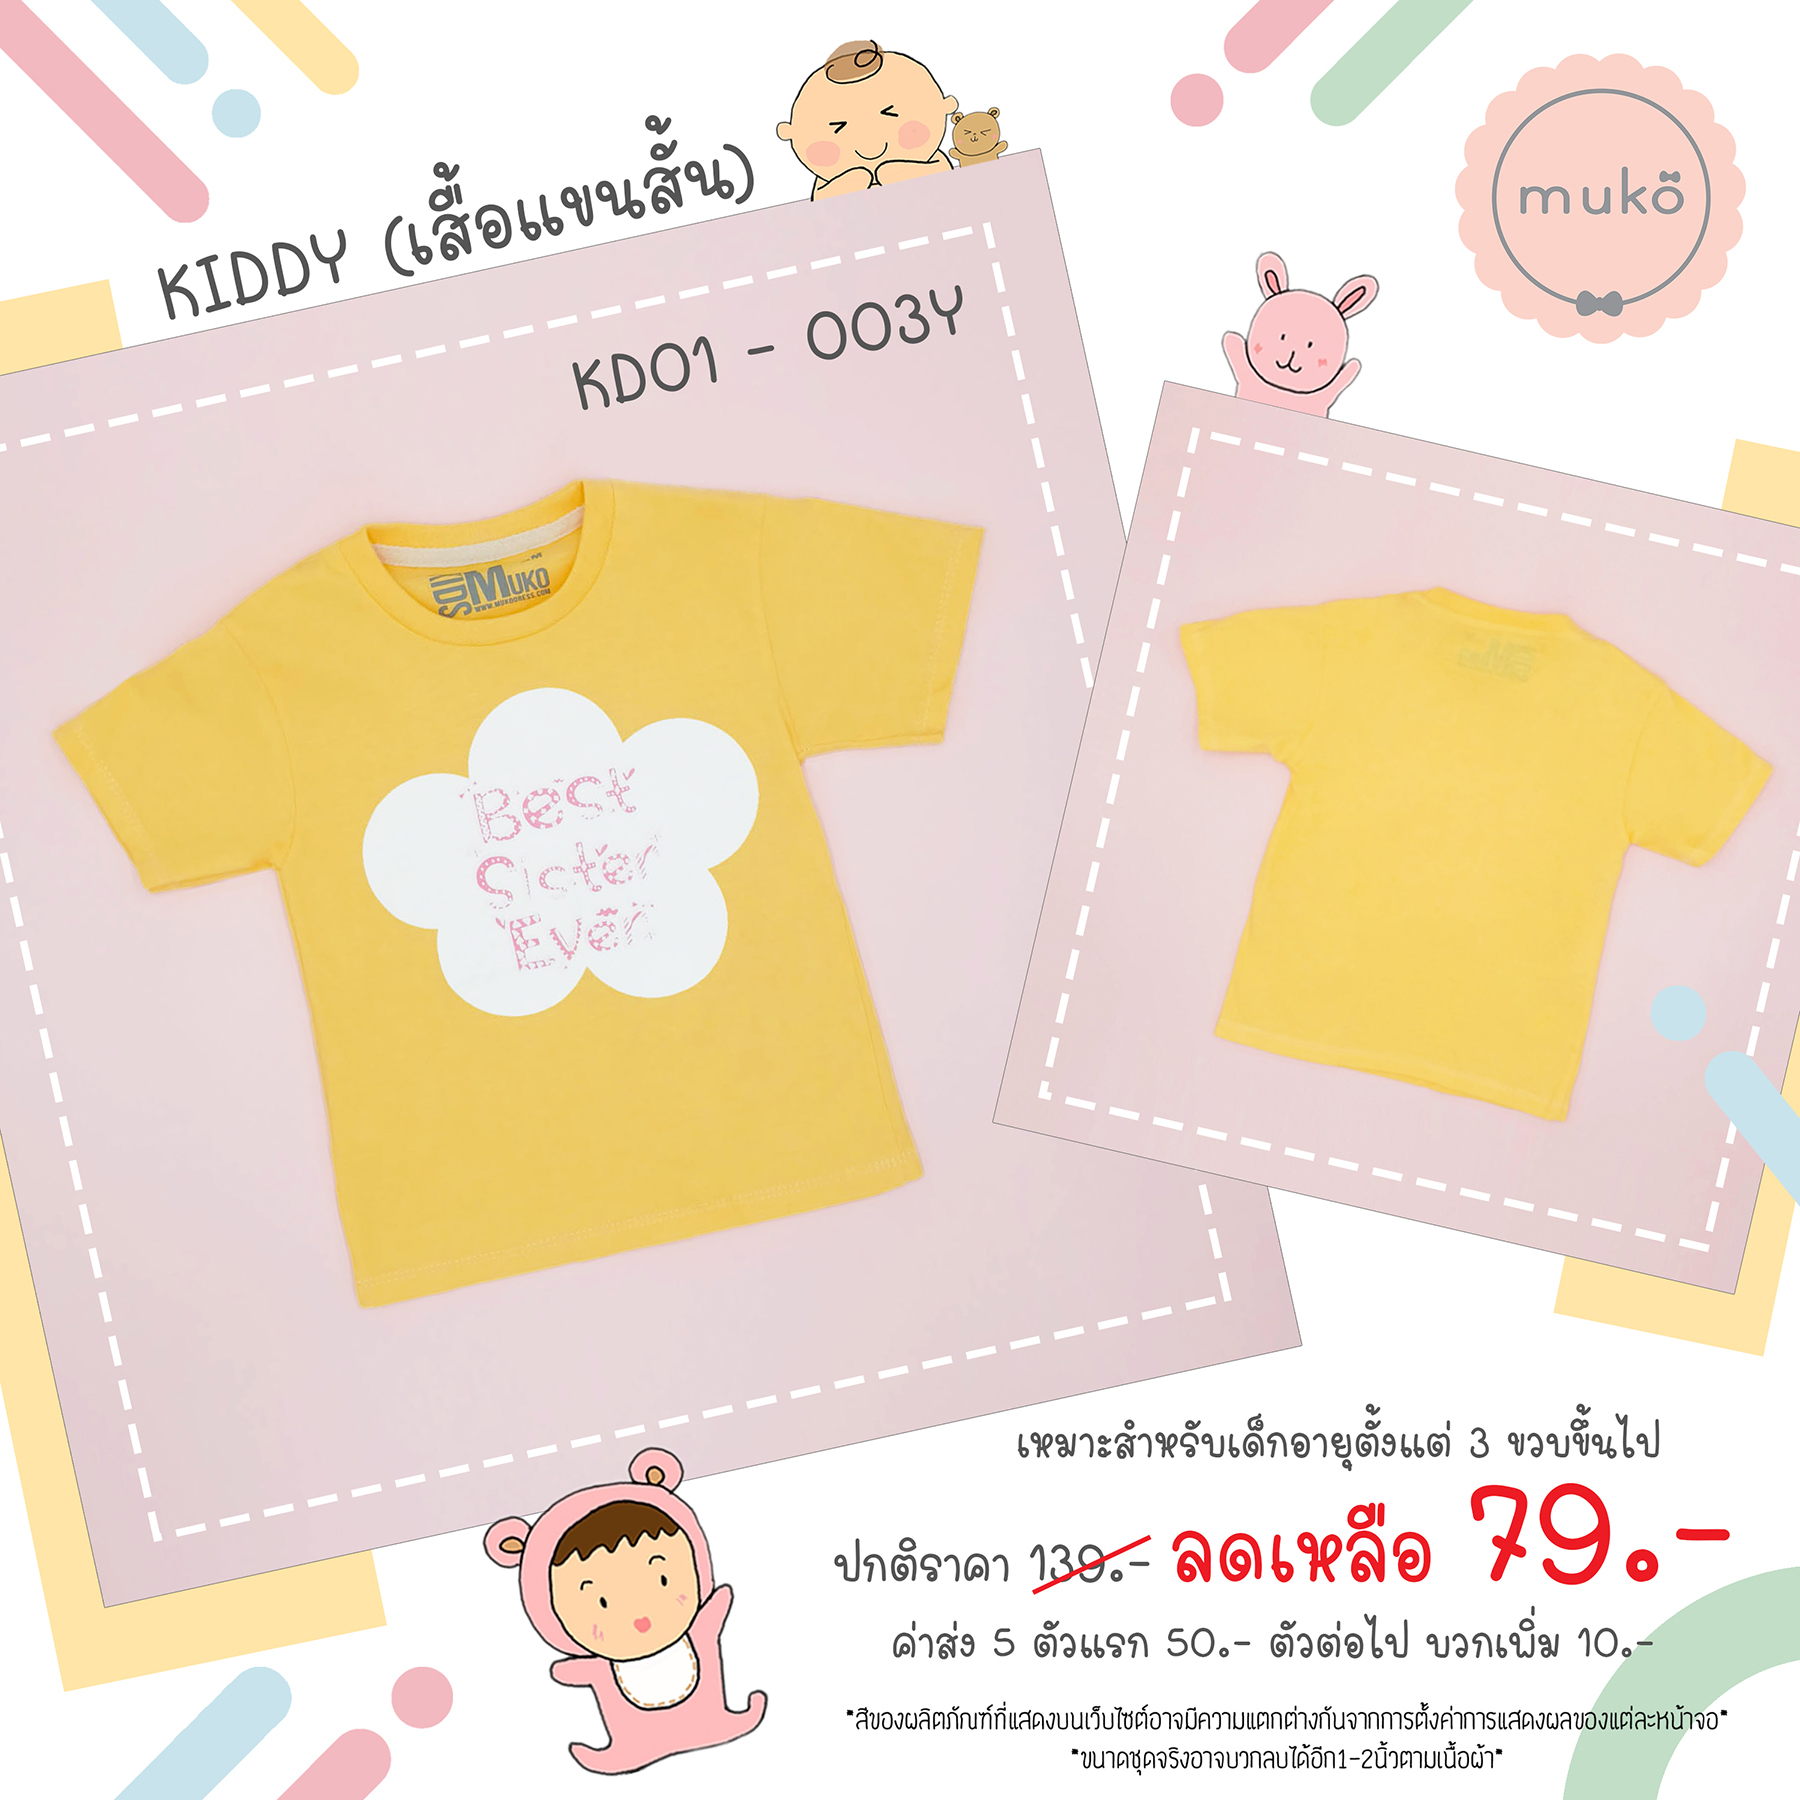 Muko Kiddy เสื้อเด็กเล็ก (แขนสั้น) Size S KD01-003Y S ลาย Best sister even สีเหลือง